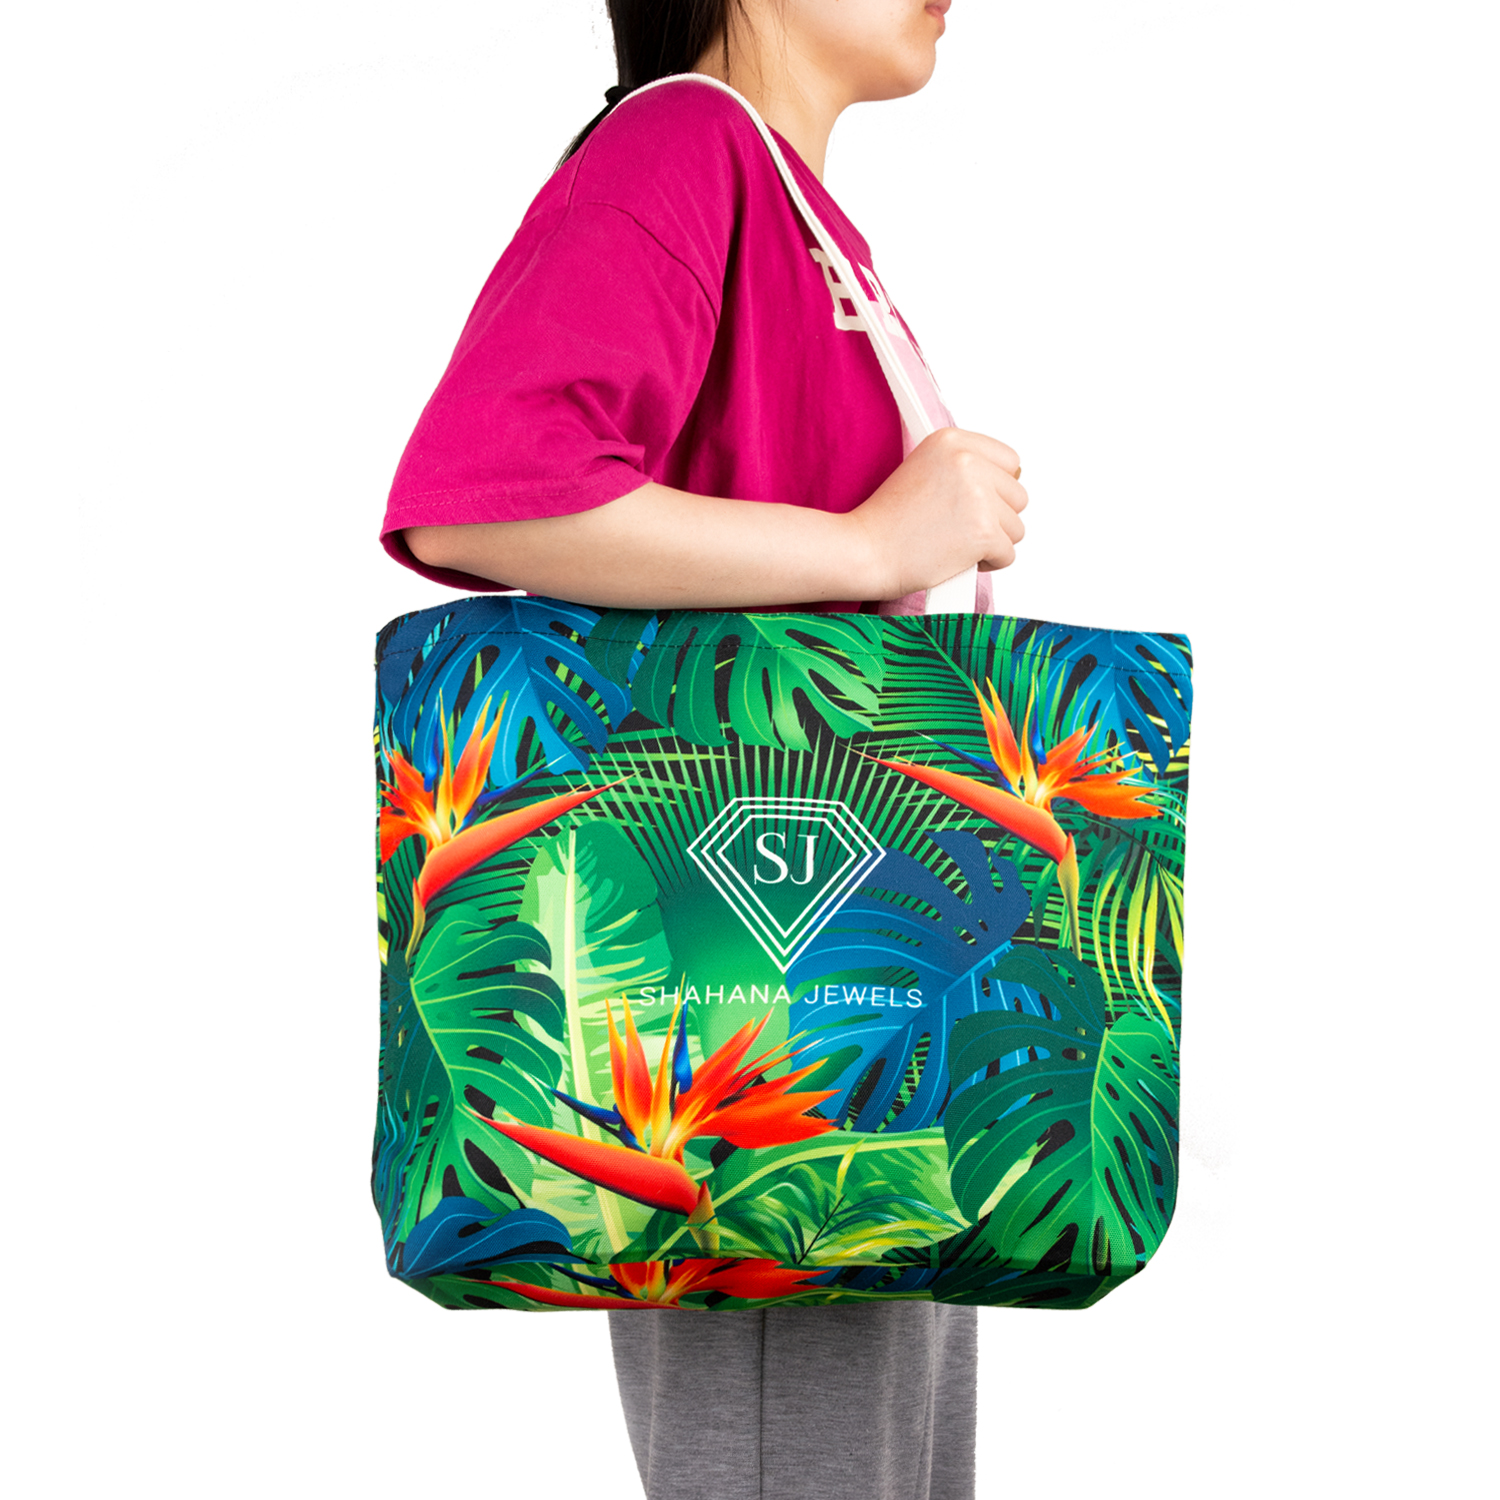 Soma Package Ltd Redefines Elegance in Canvas Tote Bags